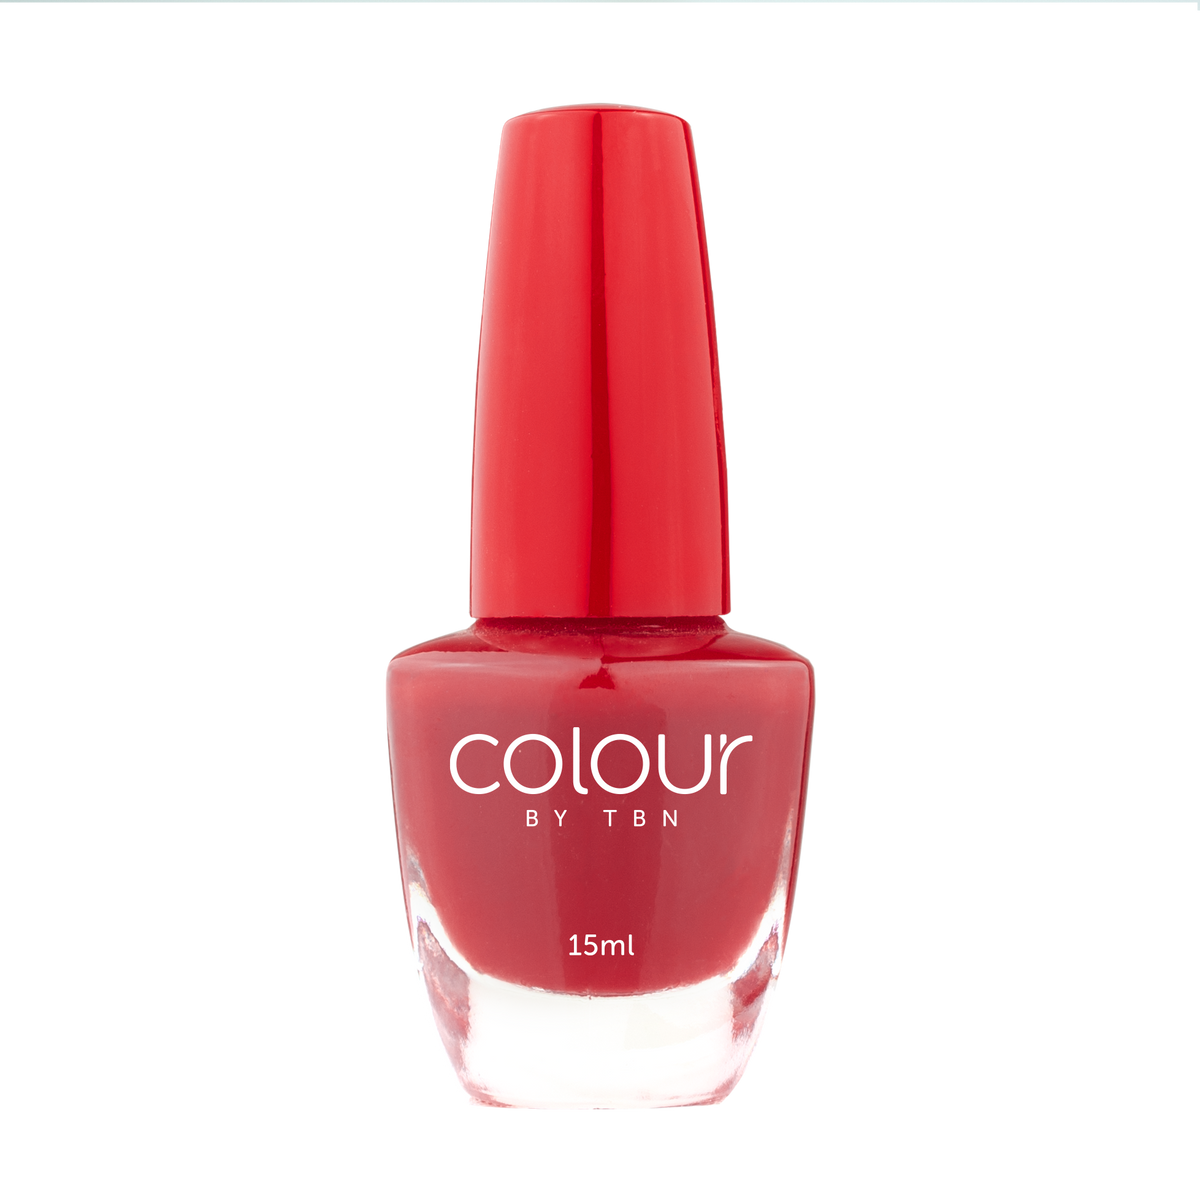 Nail Paint Blue Colour|lilycute Uv Gel Nail Polish - Bright Red Matte  Finish, Soak Off Varnish